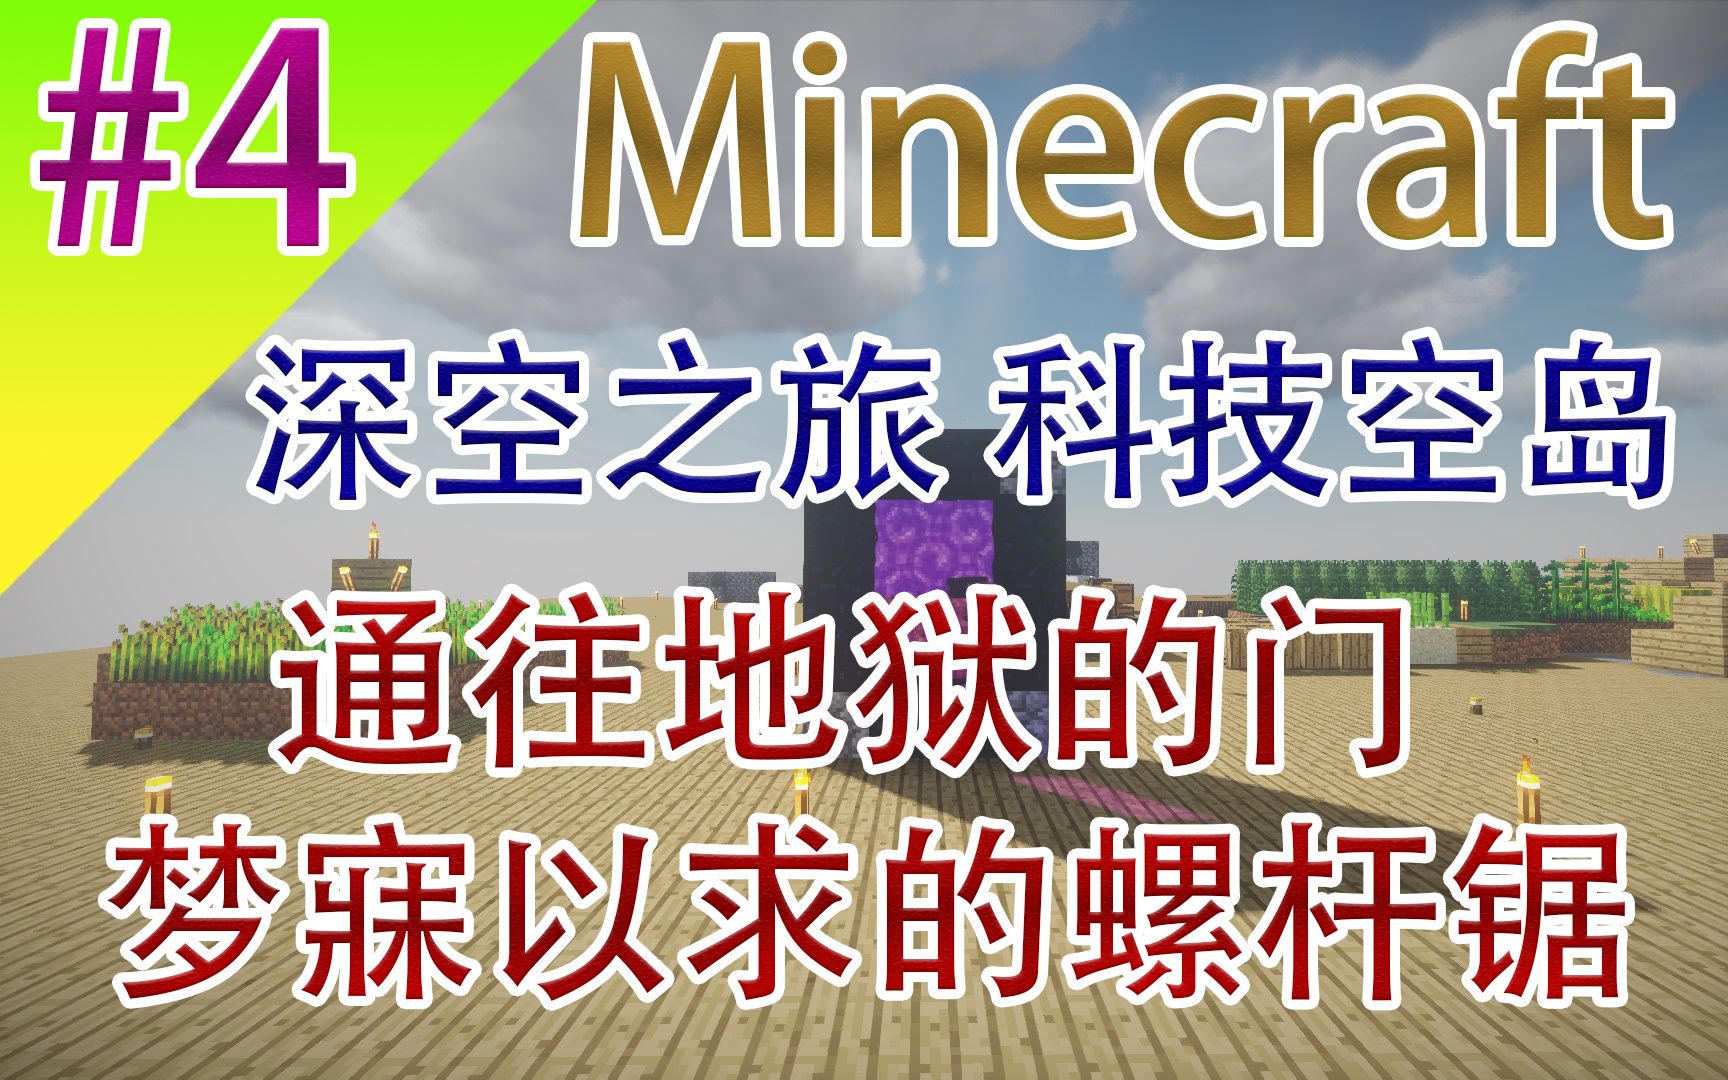 Minecraft 深空之旅科技空岛 4 通往地狱的门制作螺杆锯釜锅 哔哩哔哩 つロ干杯 Bilibili